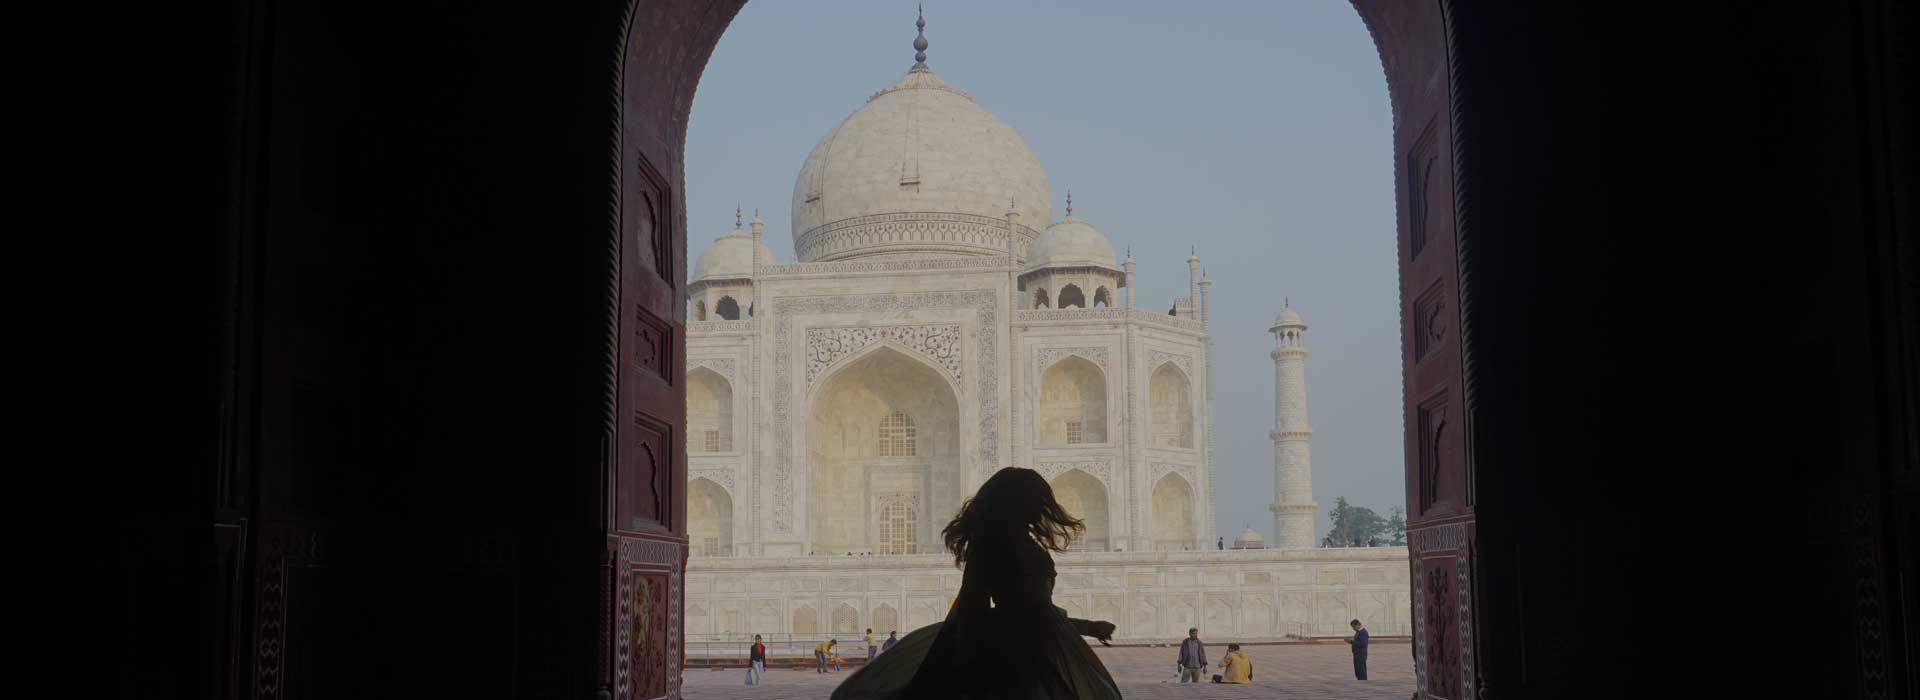 Same Day Agra Tour by Car | Taj Mahal Day Tour from Delhi - Agra Taj Trip